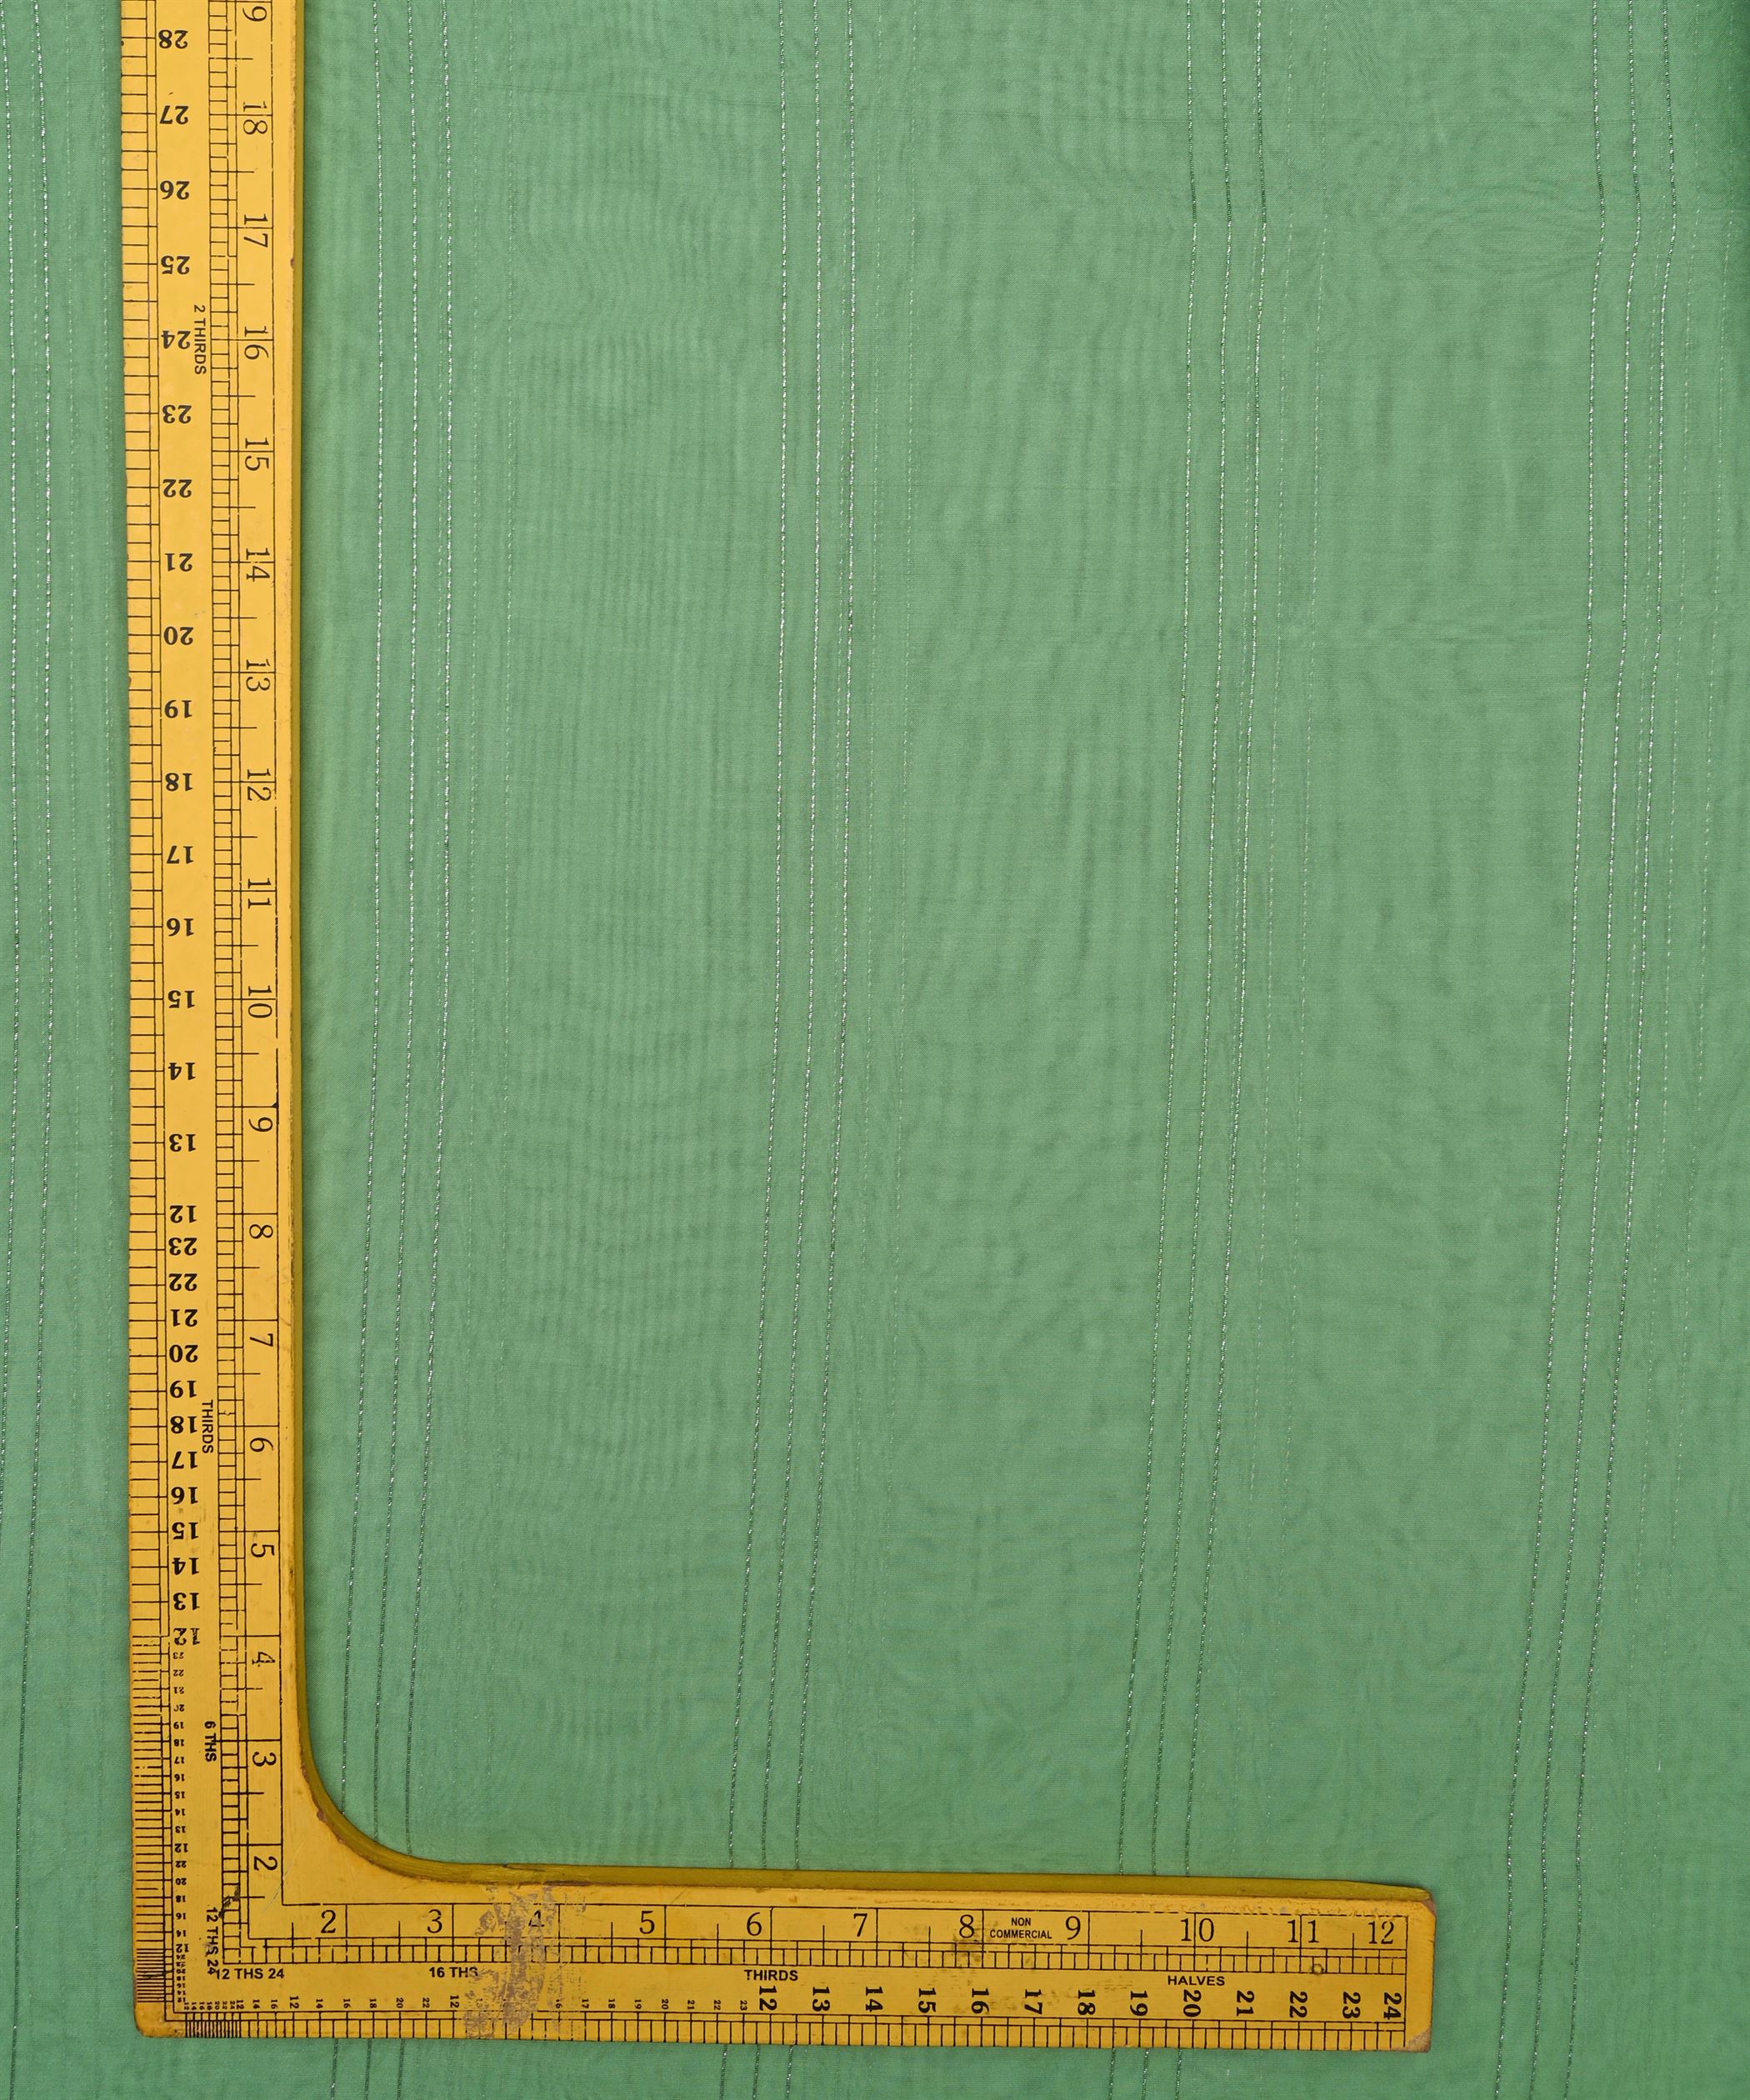 Sea Green Organza fabric with Lining